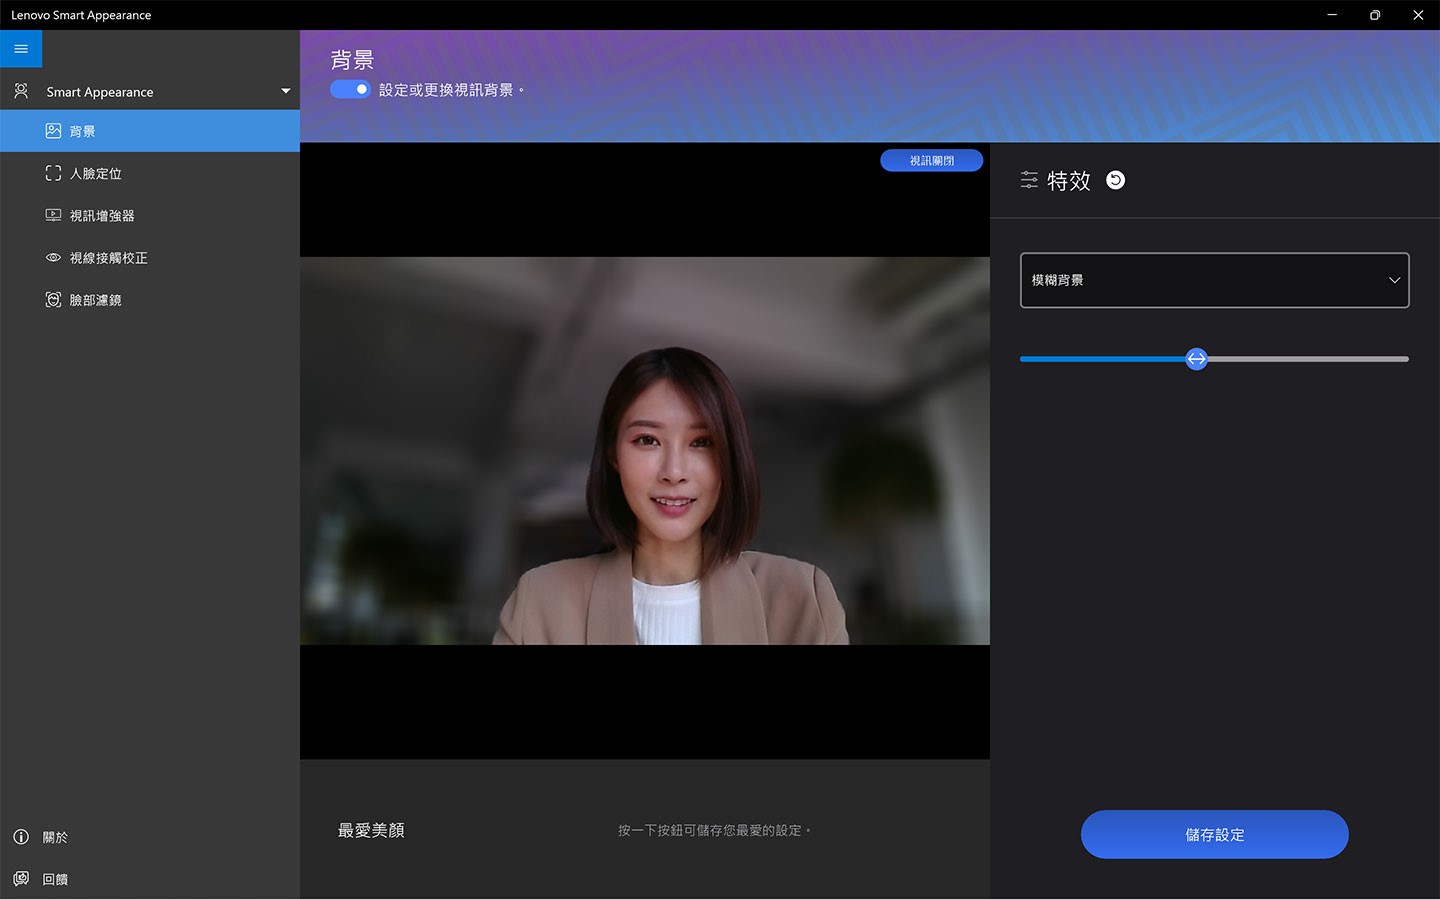 Yoga Slim 7i Pro X 內建 AI 技術加持的 Lenovo 智慧美顏功能，可進一改善視訊的人像呈現效果，並讓背景虛化。